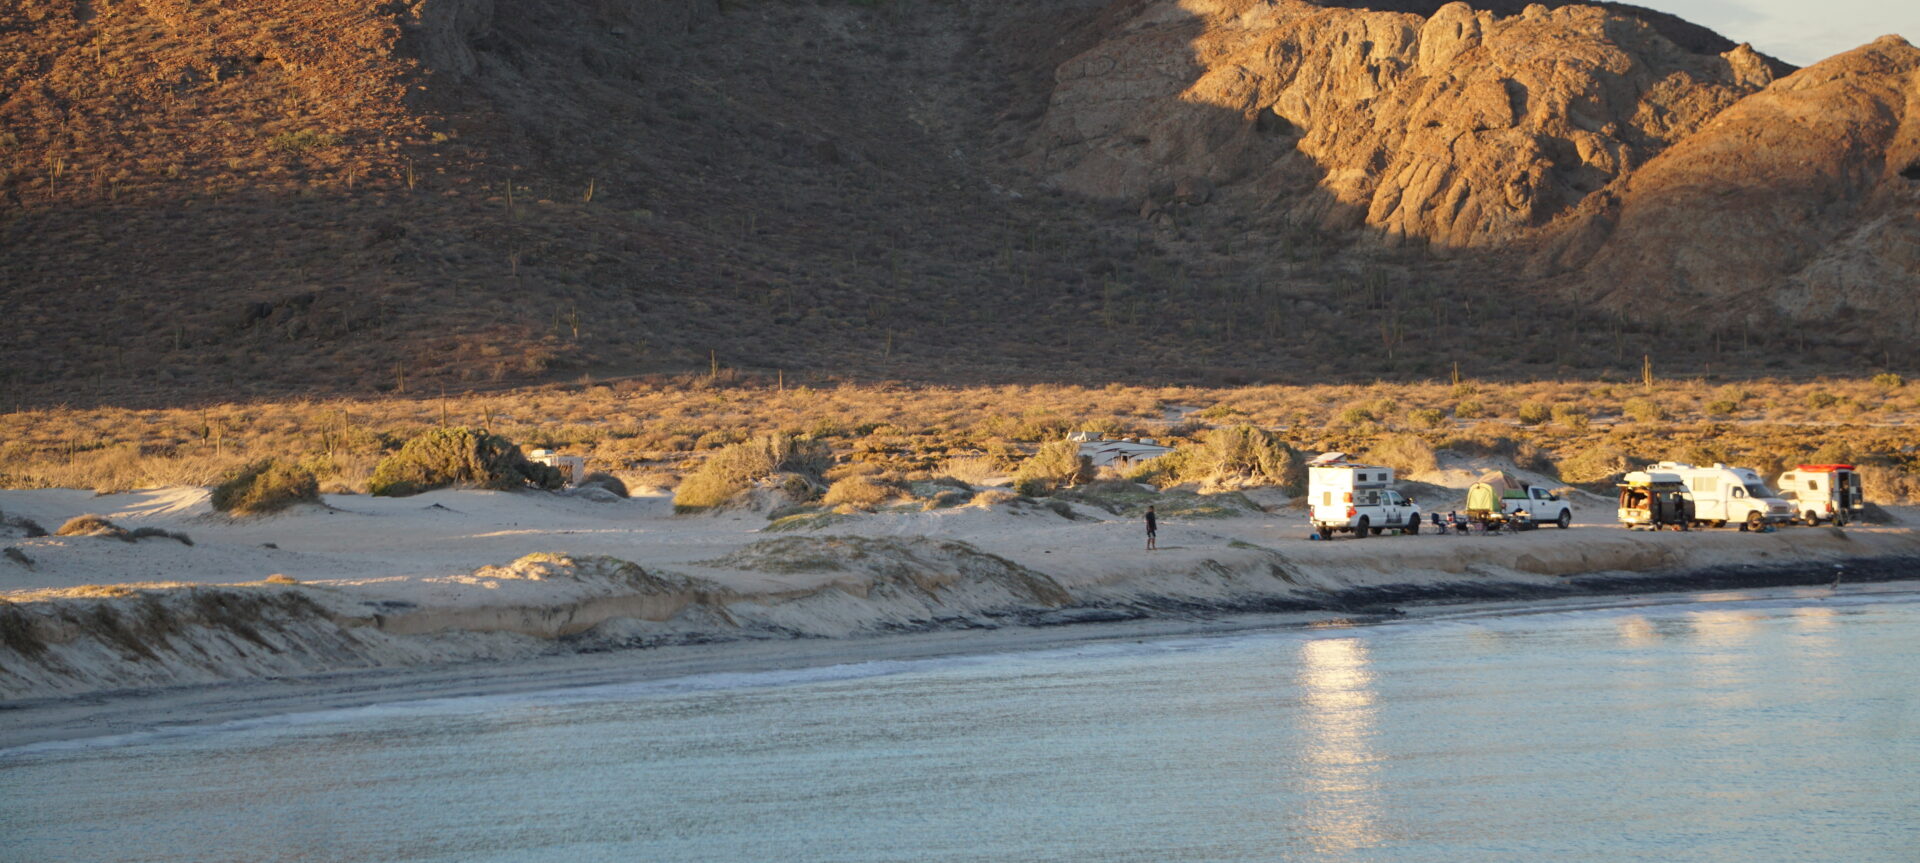 The Best RV Camping in Baja California